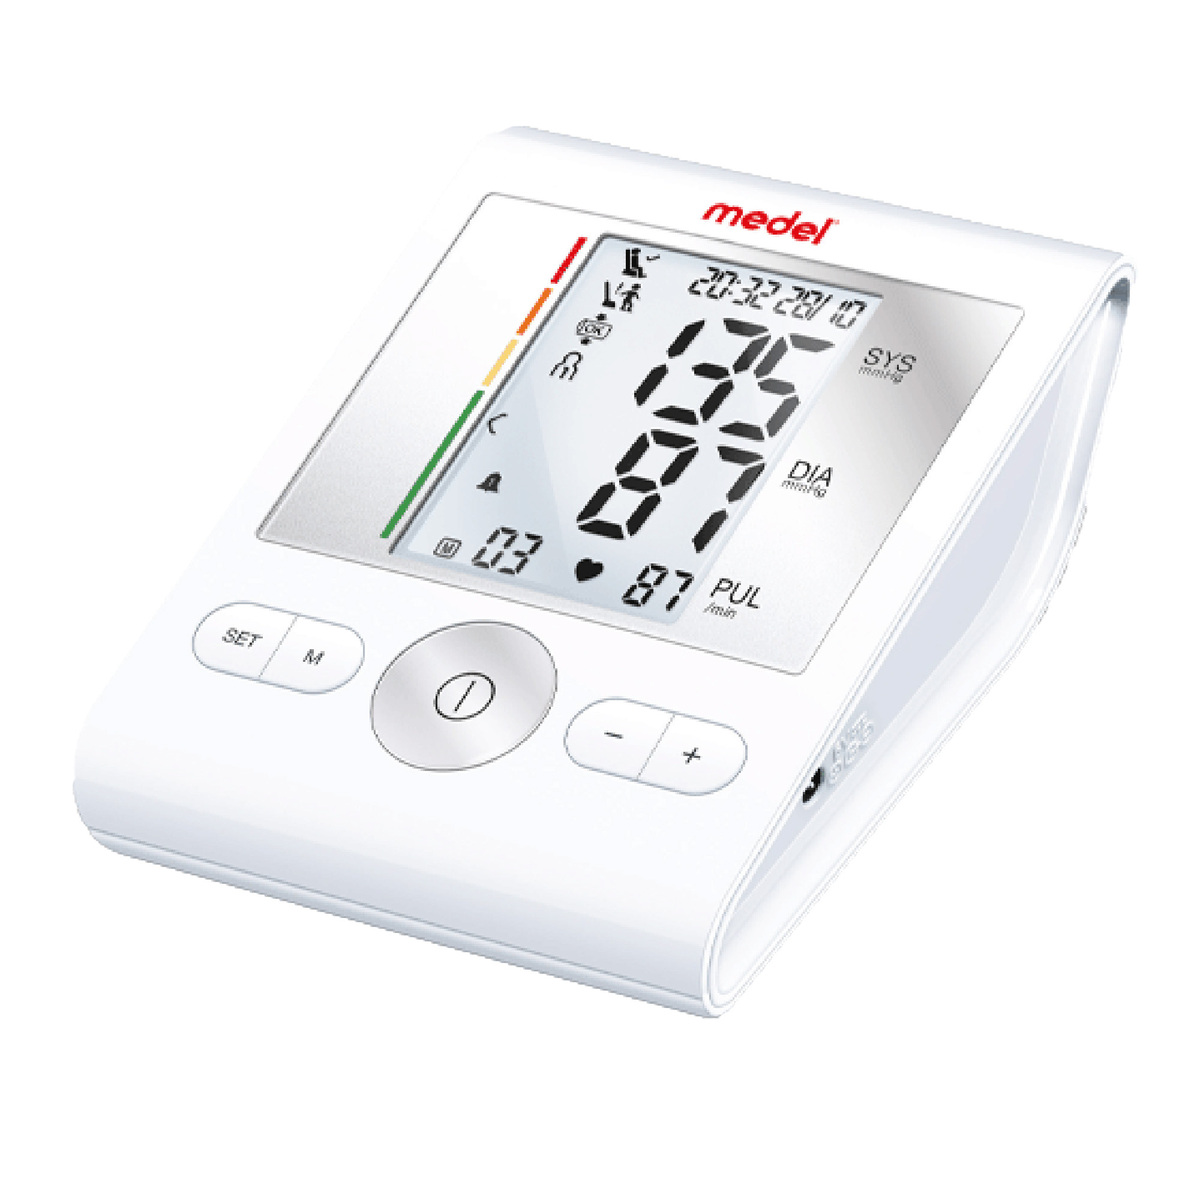 Medel  Sense Blood Pressure Monitor REF-95251